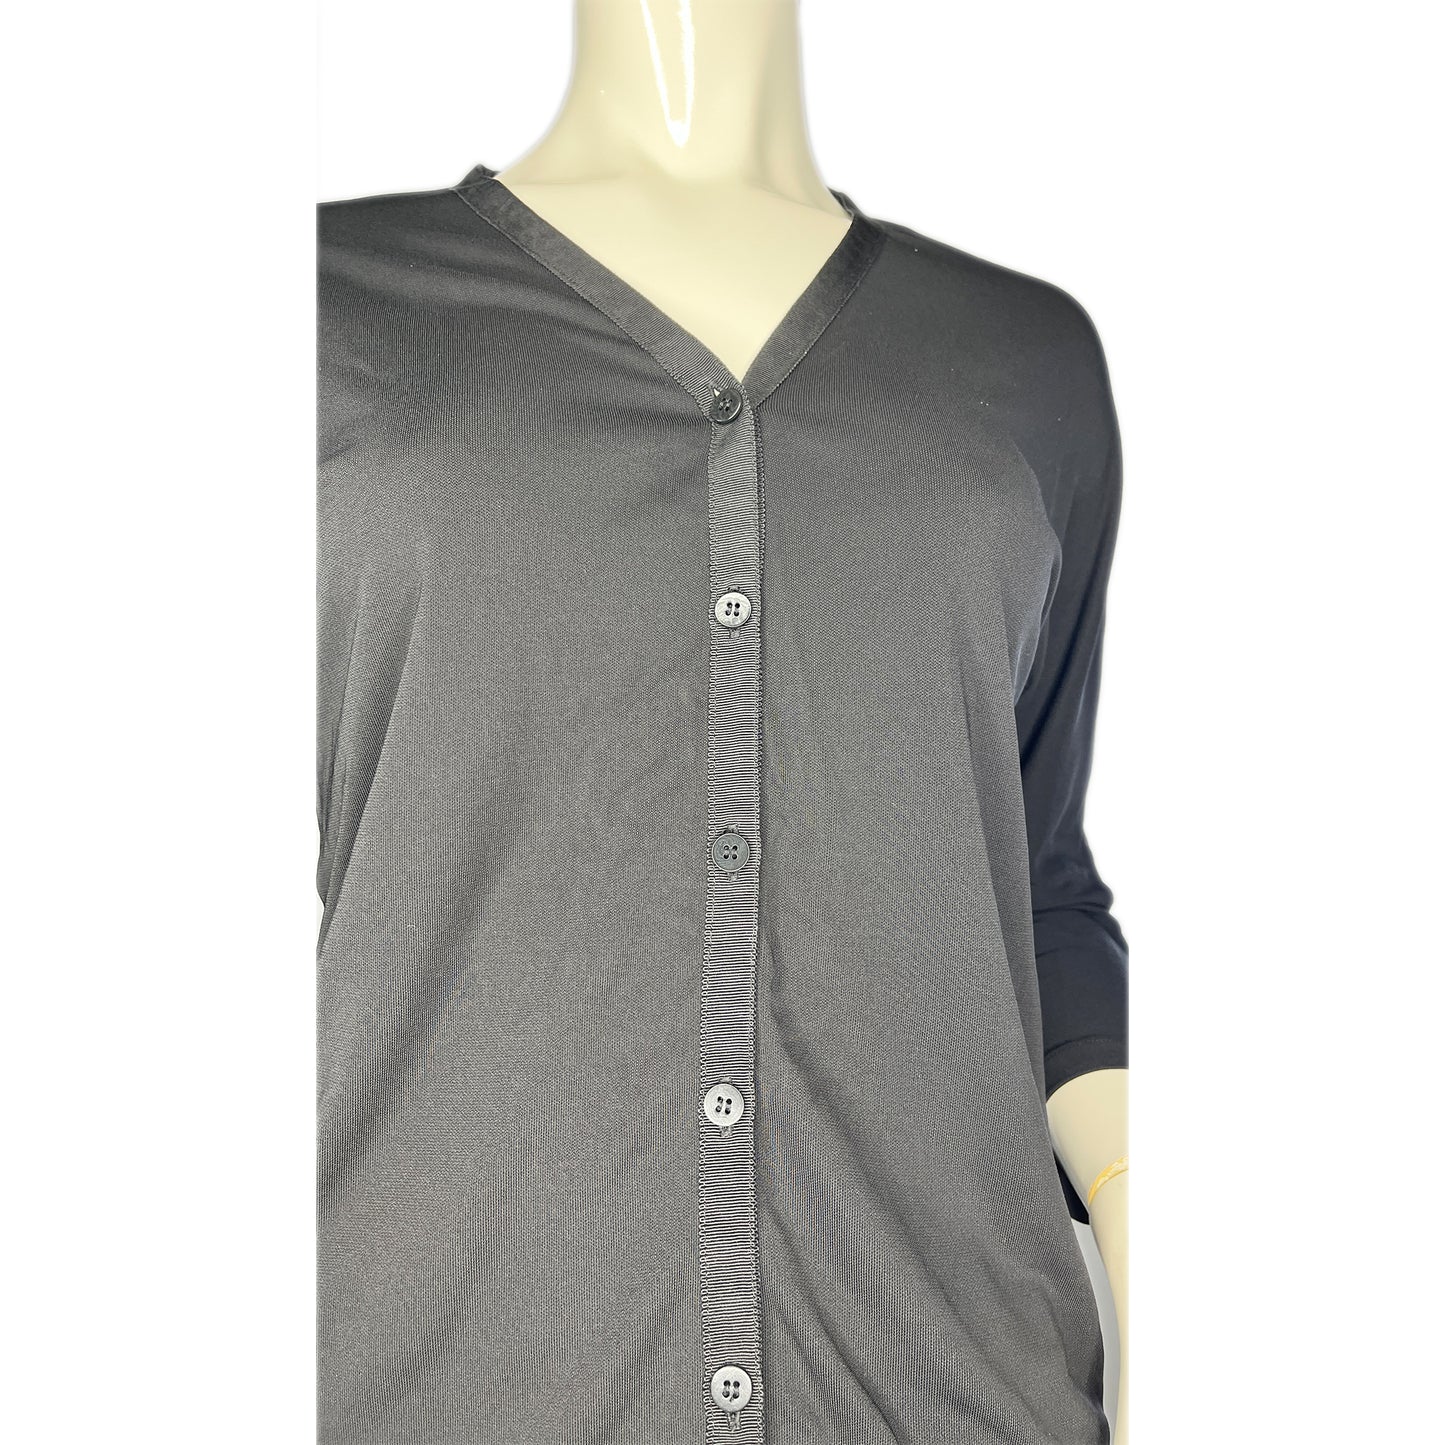 DKNY Top Long Sleeves Button Down Black Size M SKU 000236-9